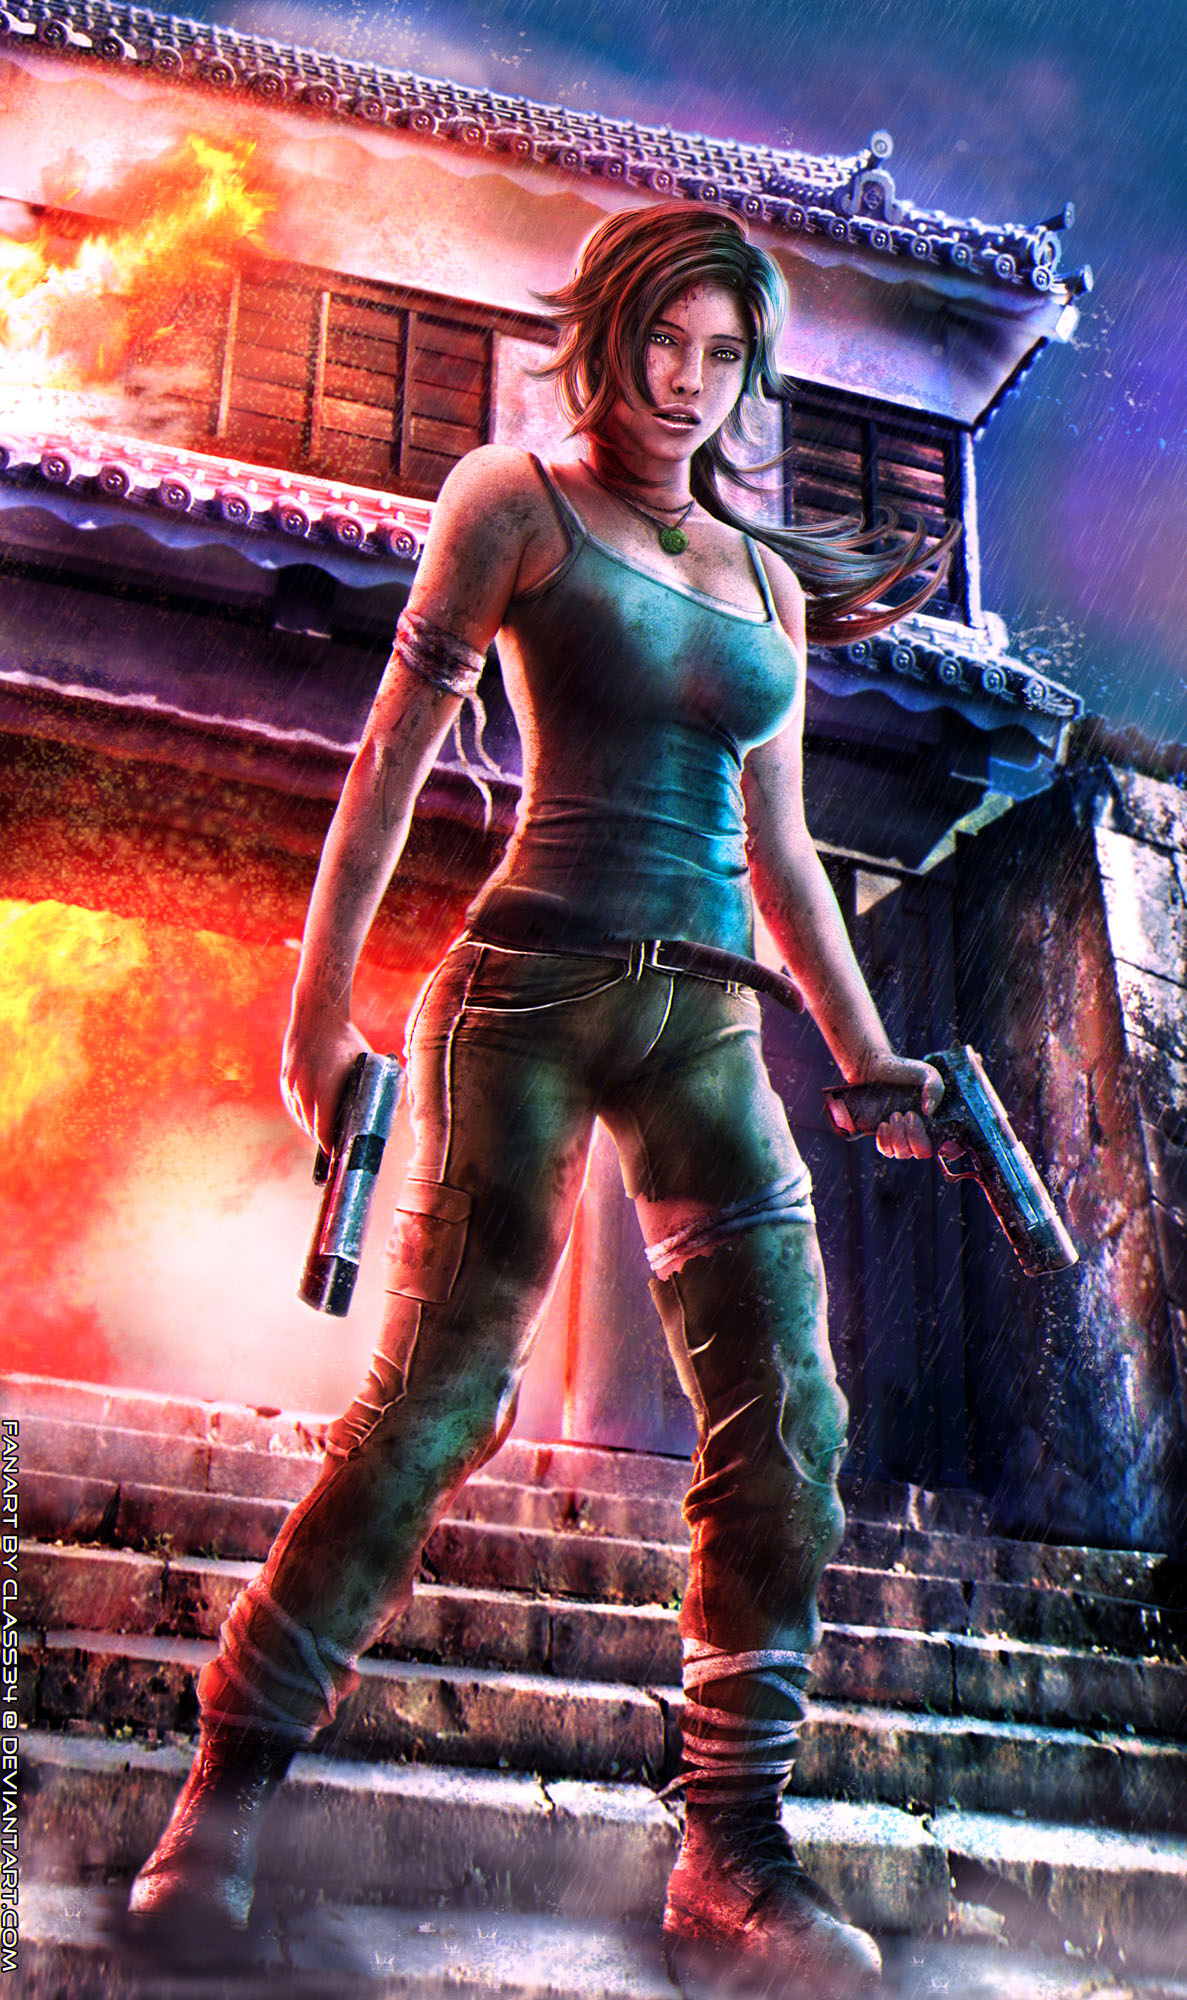 Lara Croft is Back!